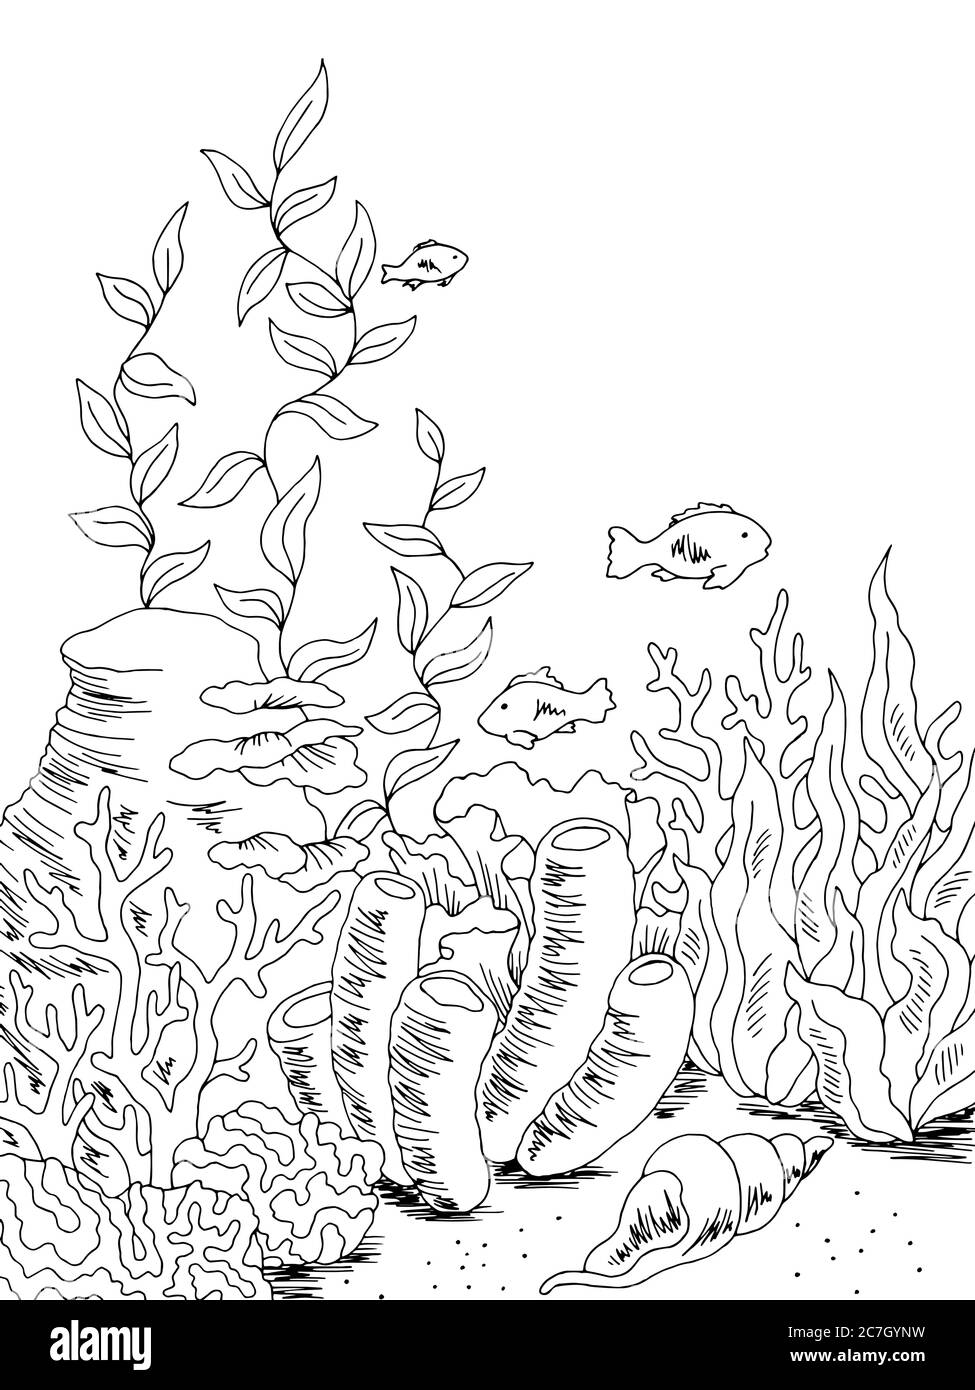 Unterwasser vertikale Grafik Meer schwarz weiß Skizze Illustration Vektor Stock Vektor